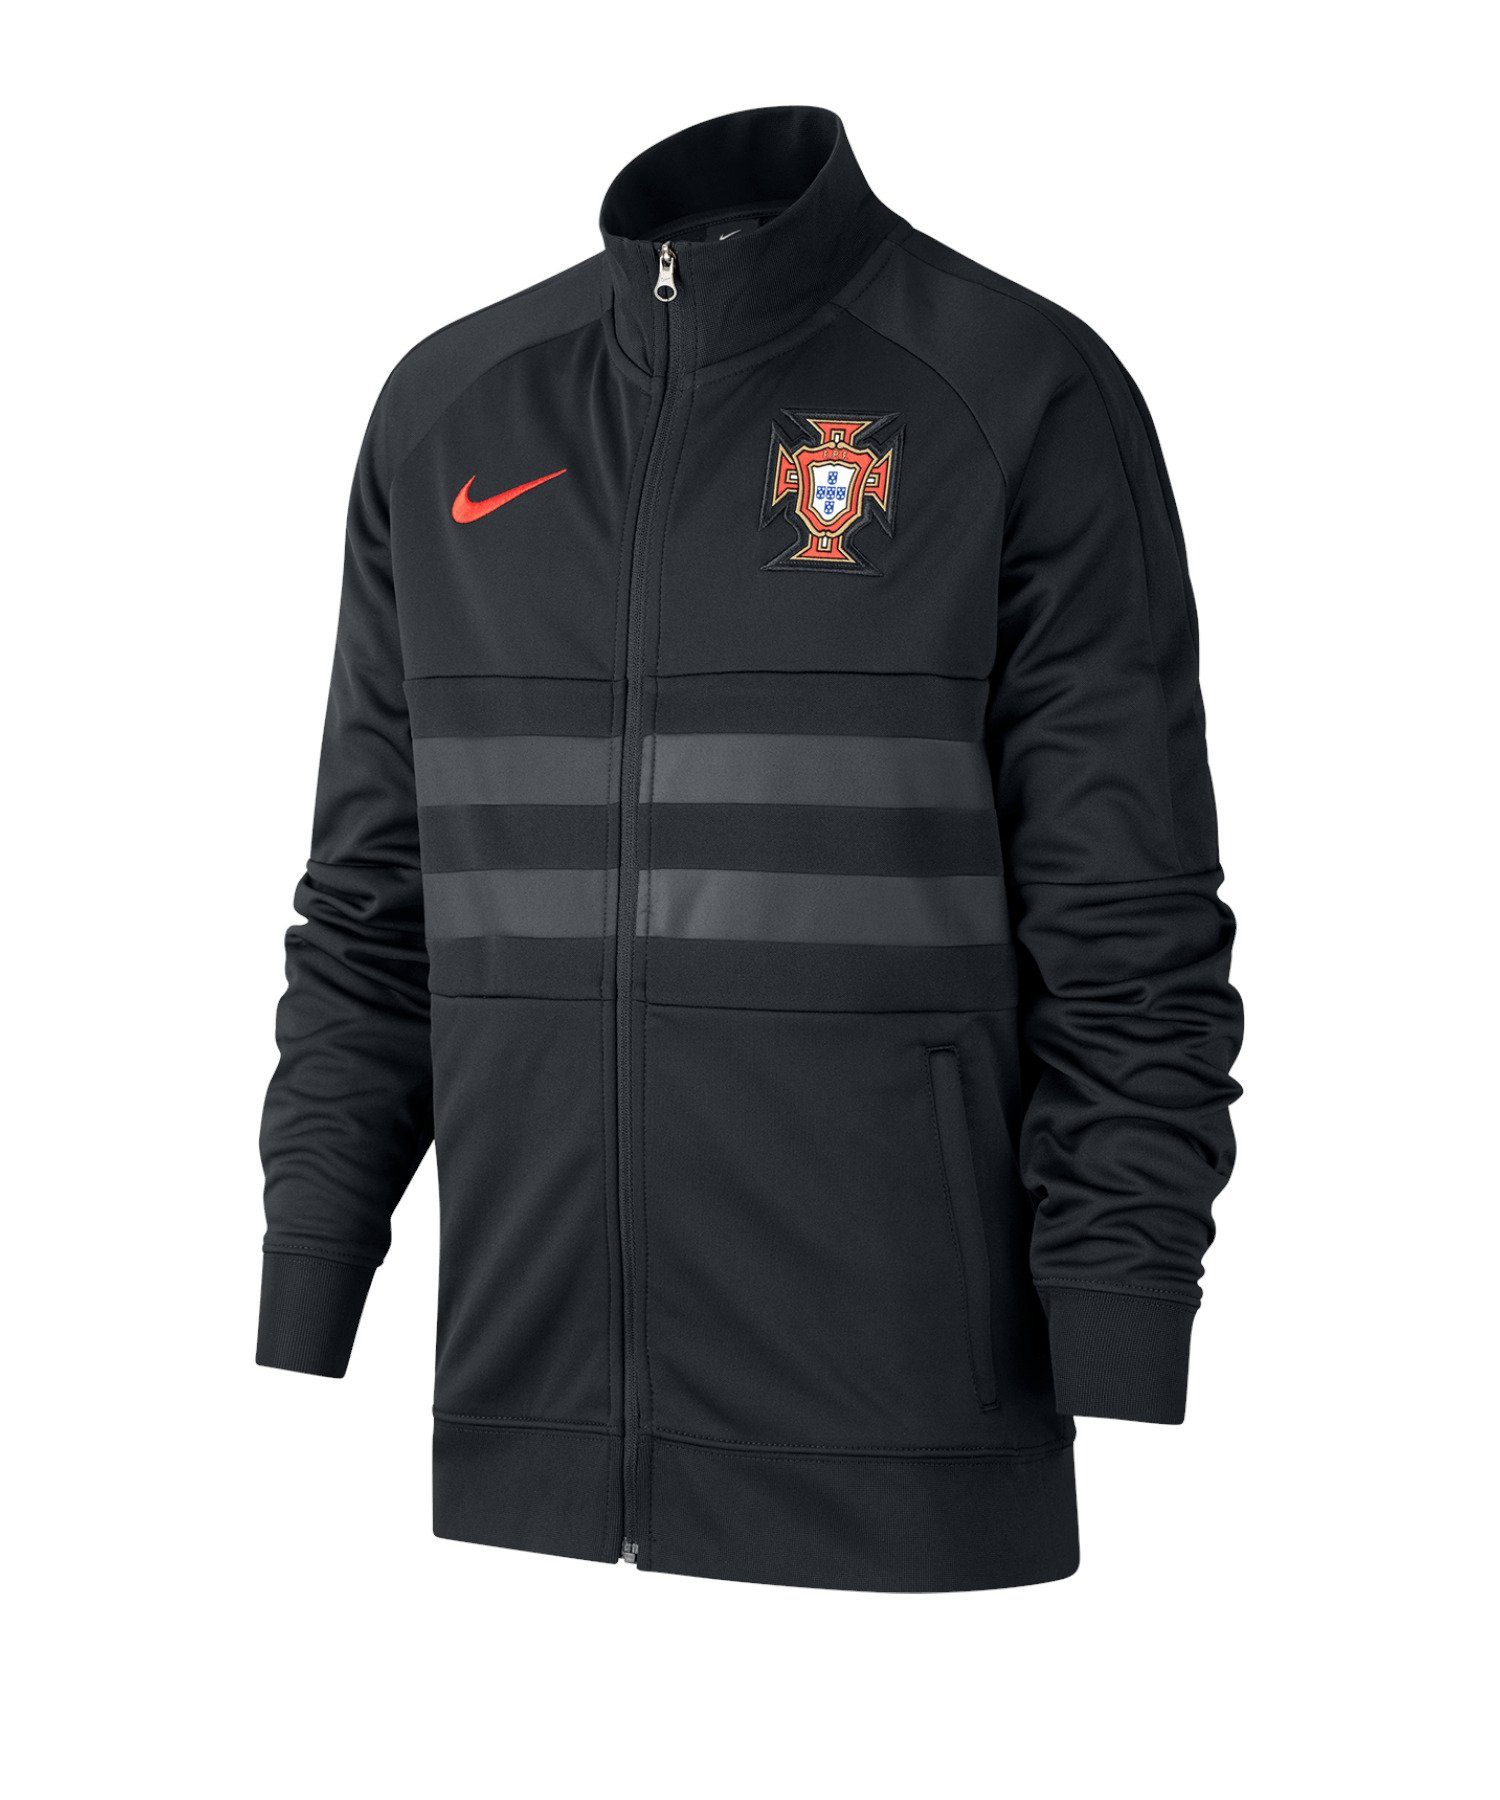 Nike Sweatjacke »Portugal I96 Jacket Jacke Kinder«